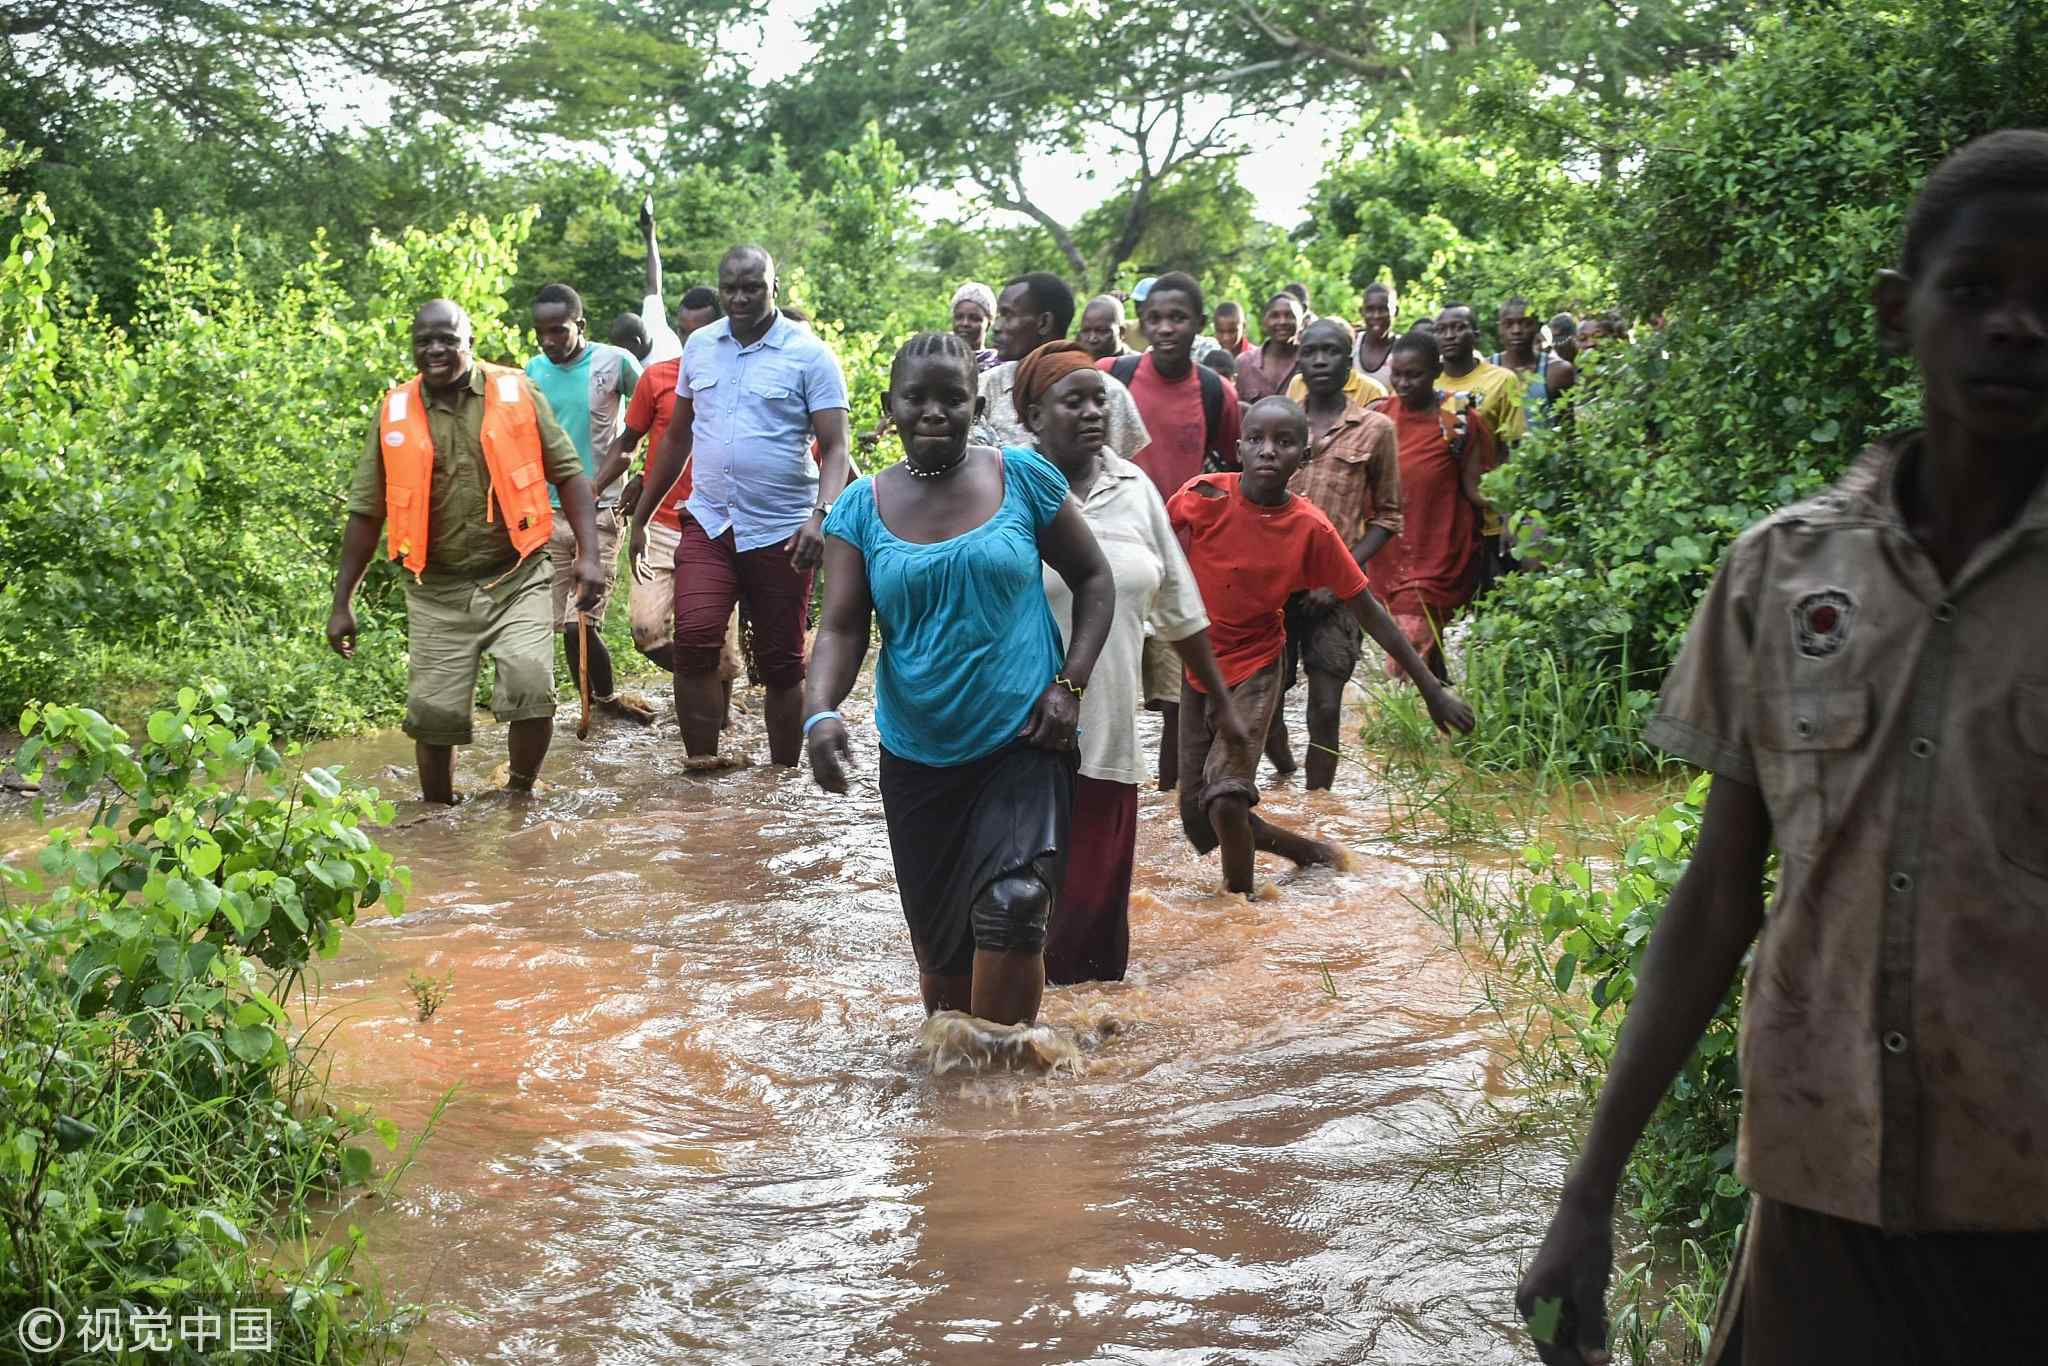 Floods kill 186 across Kenya: UN agency - CGTN